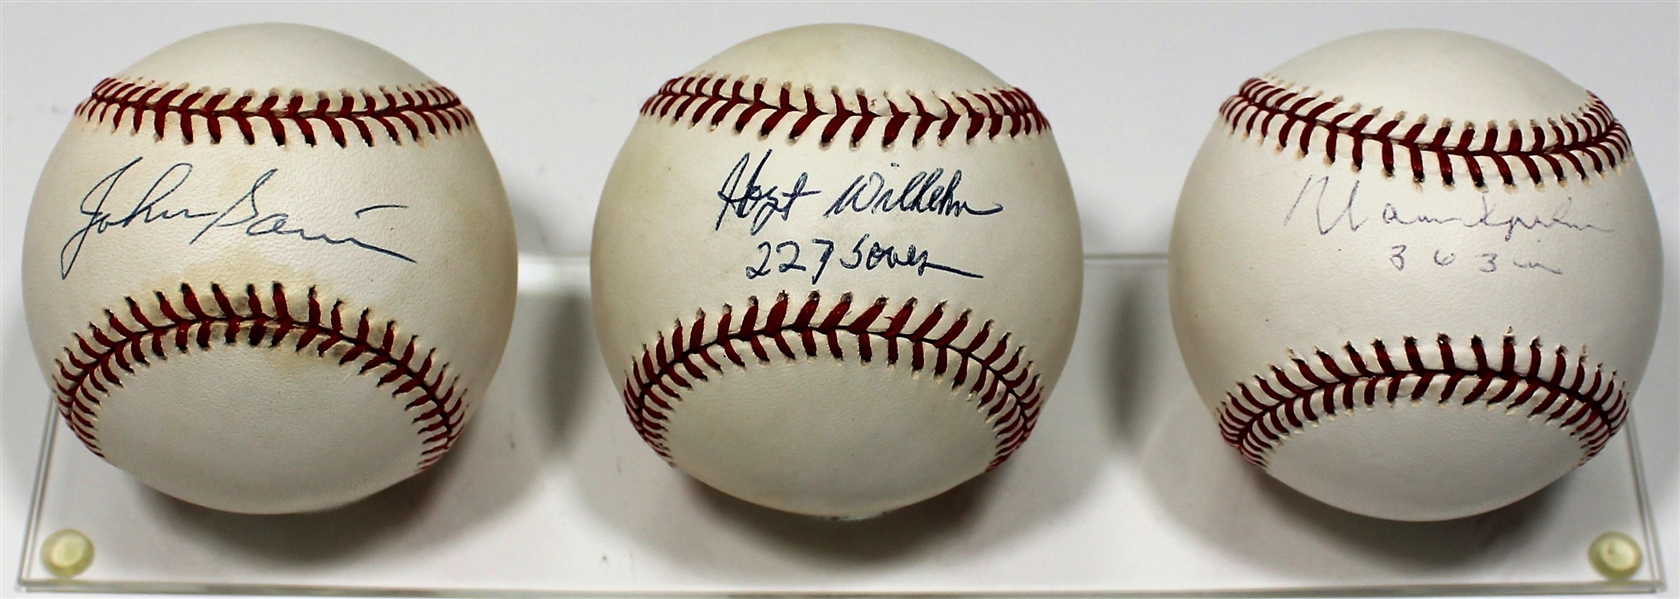 Johnny Sain - Hoyt Willehm - Warren Sphan Signed Baseball - JSA